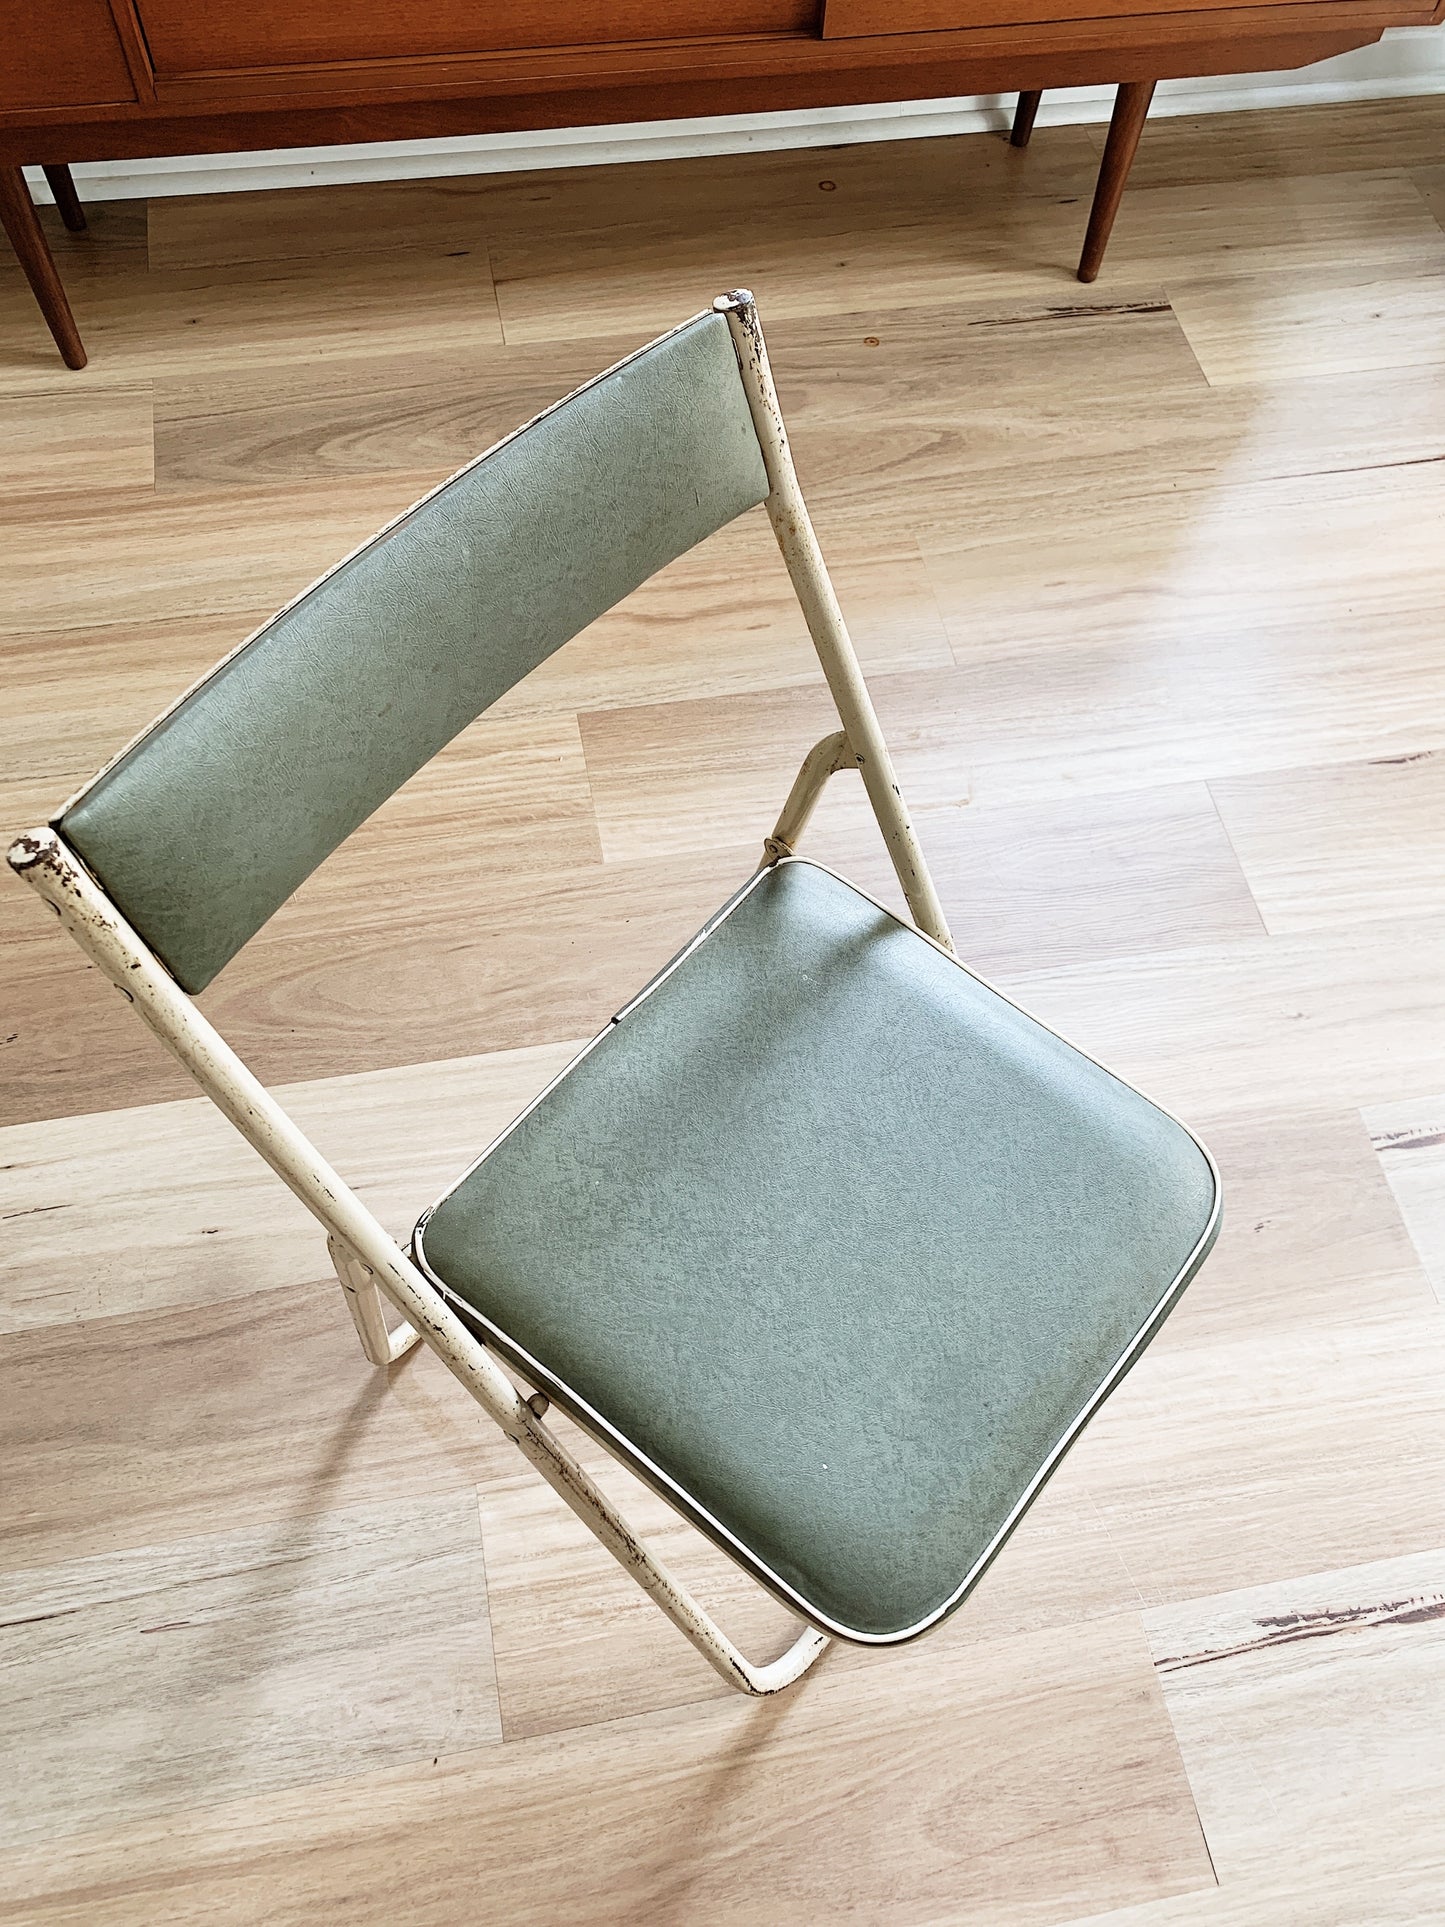 Japanese Mid Century Industrial Sankei Folding Chairs (each)